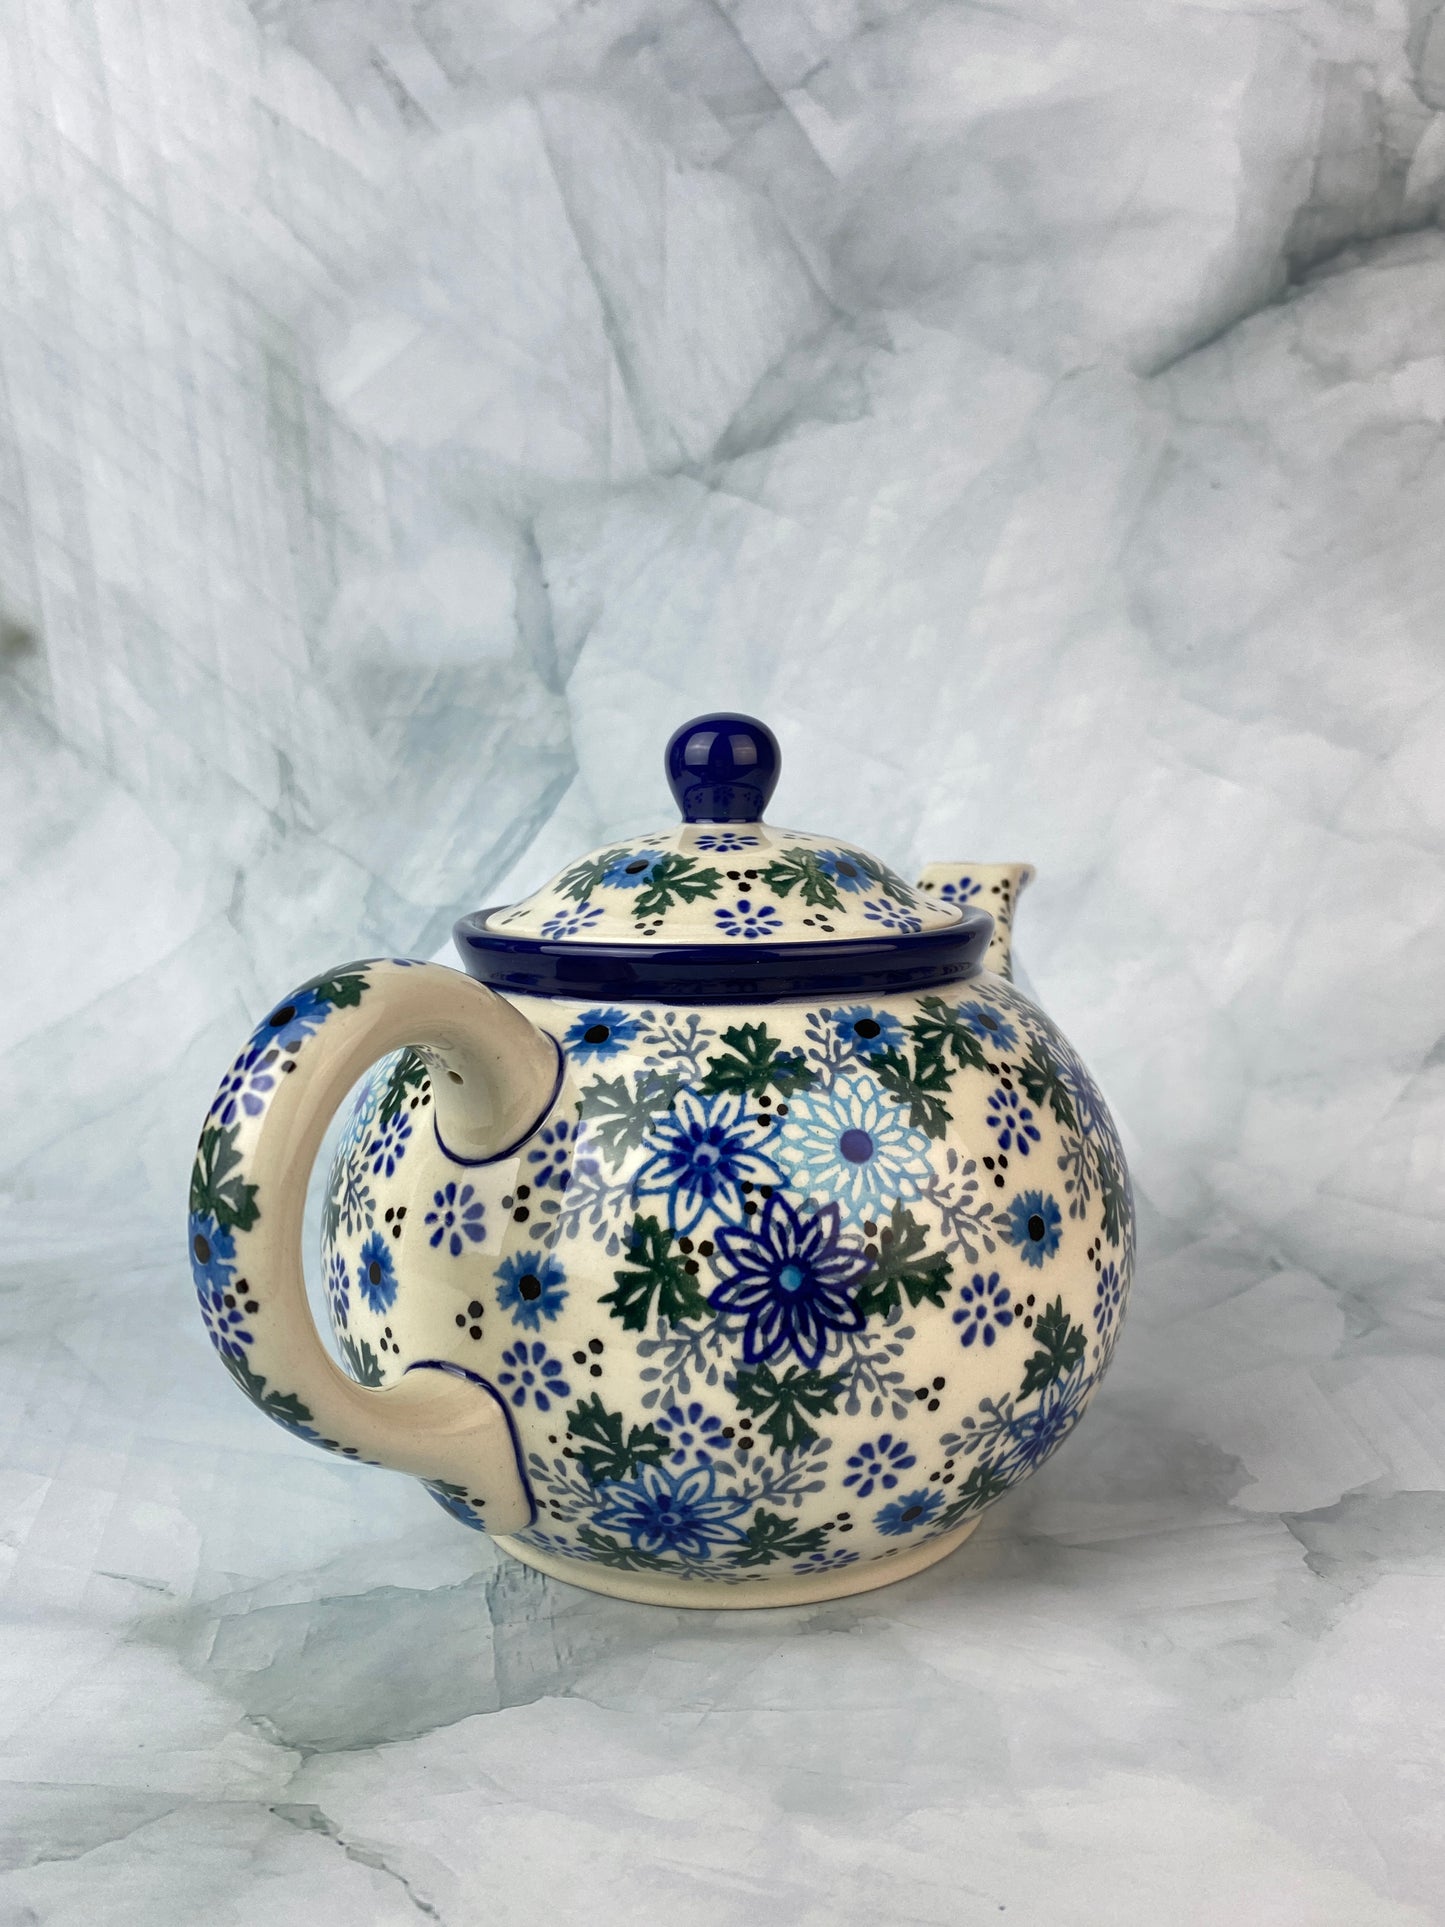 SALE 3 Cup Unikat Teapot - Shape 264 - Pattern U1685